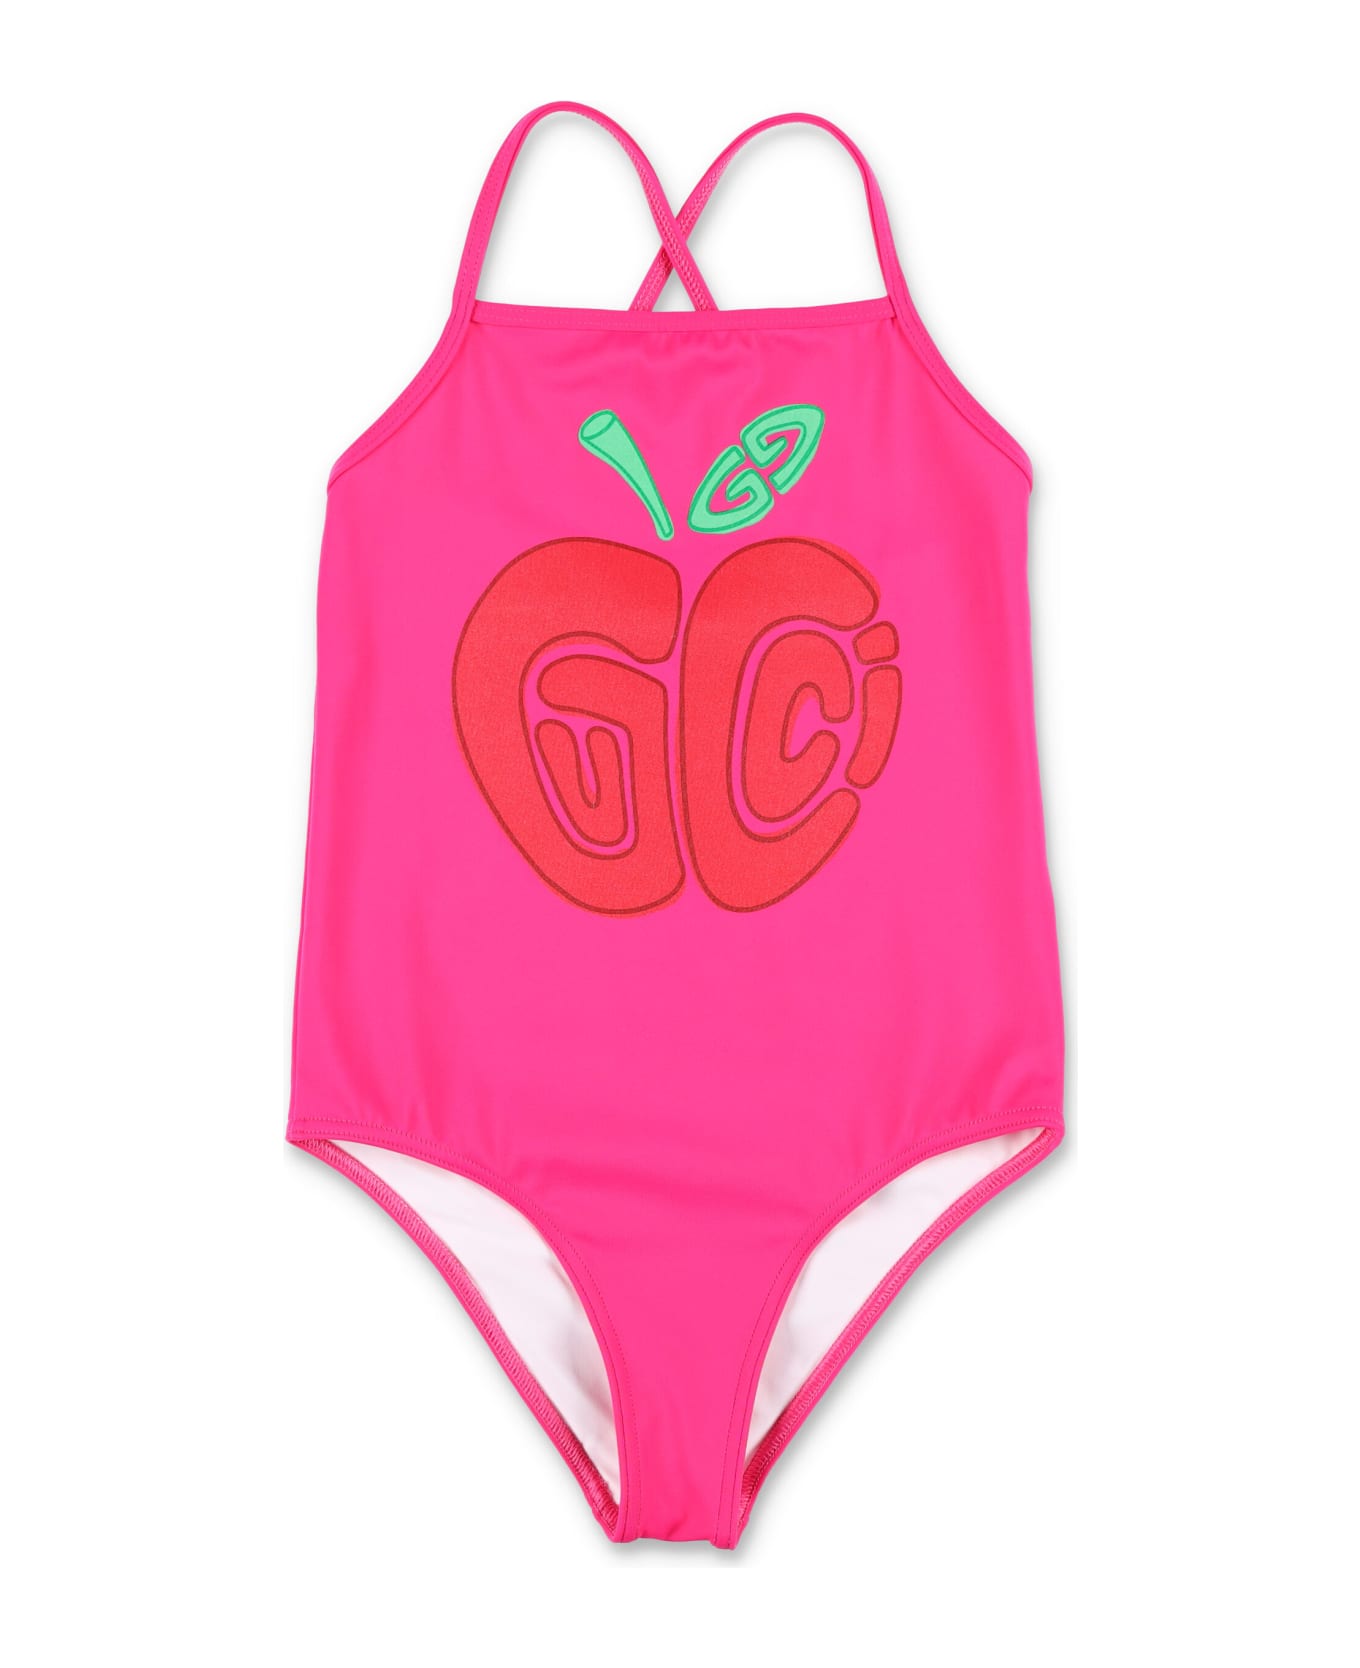 Gucci Gg Apple Swimsuit - Fuchsia